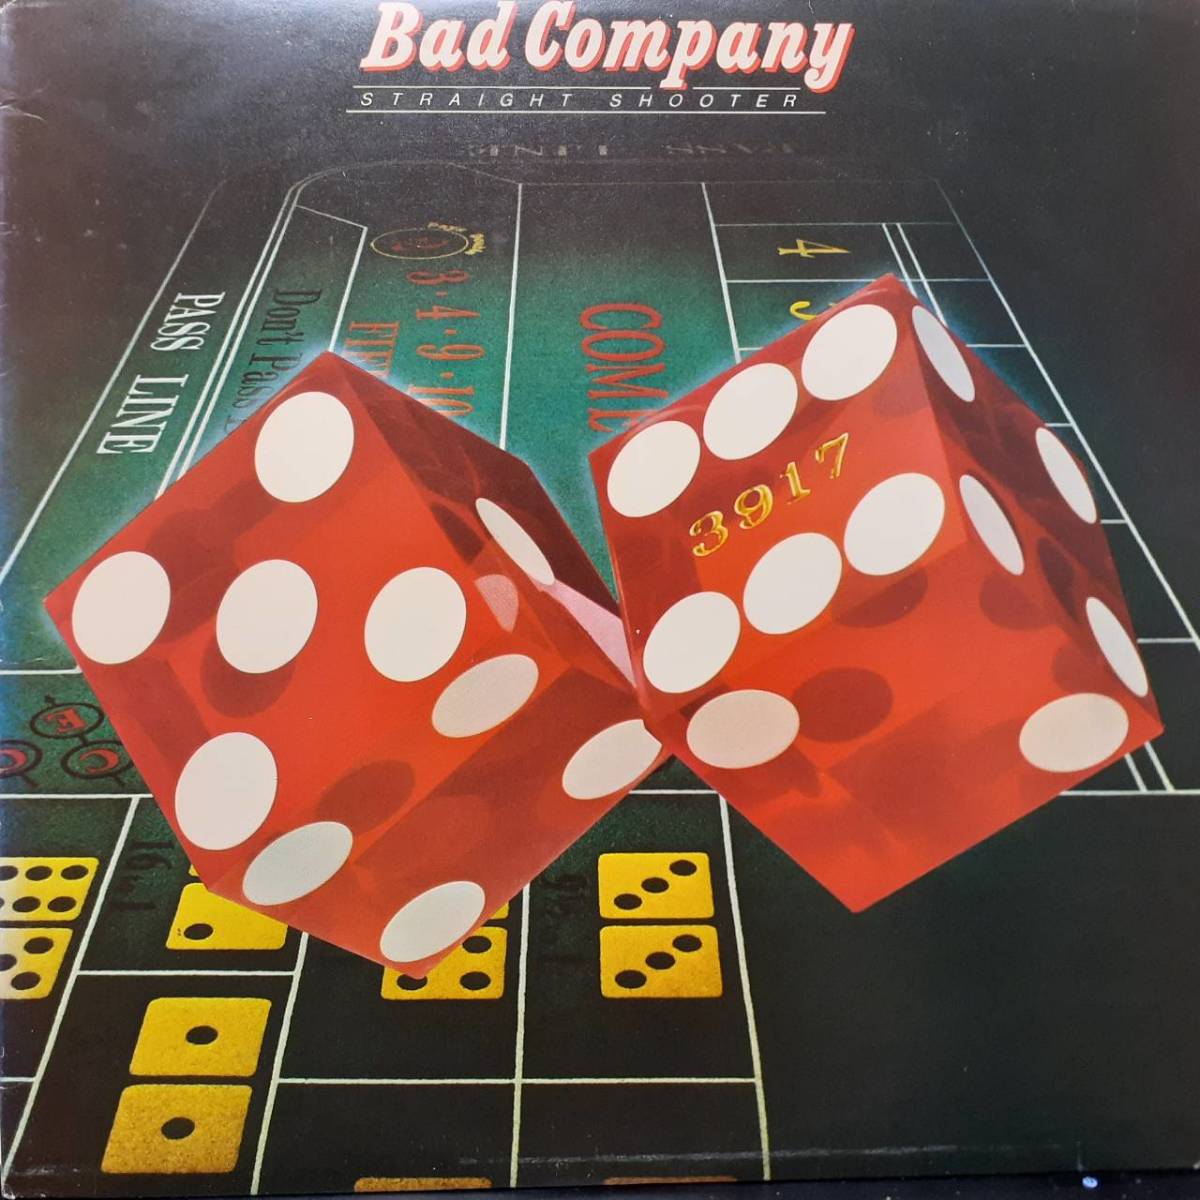  britain ISLANDo Rige LP!mato branch 1U!TML stamp!Bad Company / Straight Shooter 1975 year ILPS 9304 Boz Burrell(King Crimson) Paul Rodgers Free